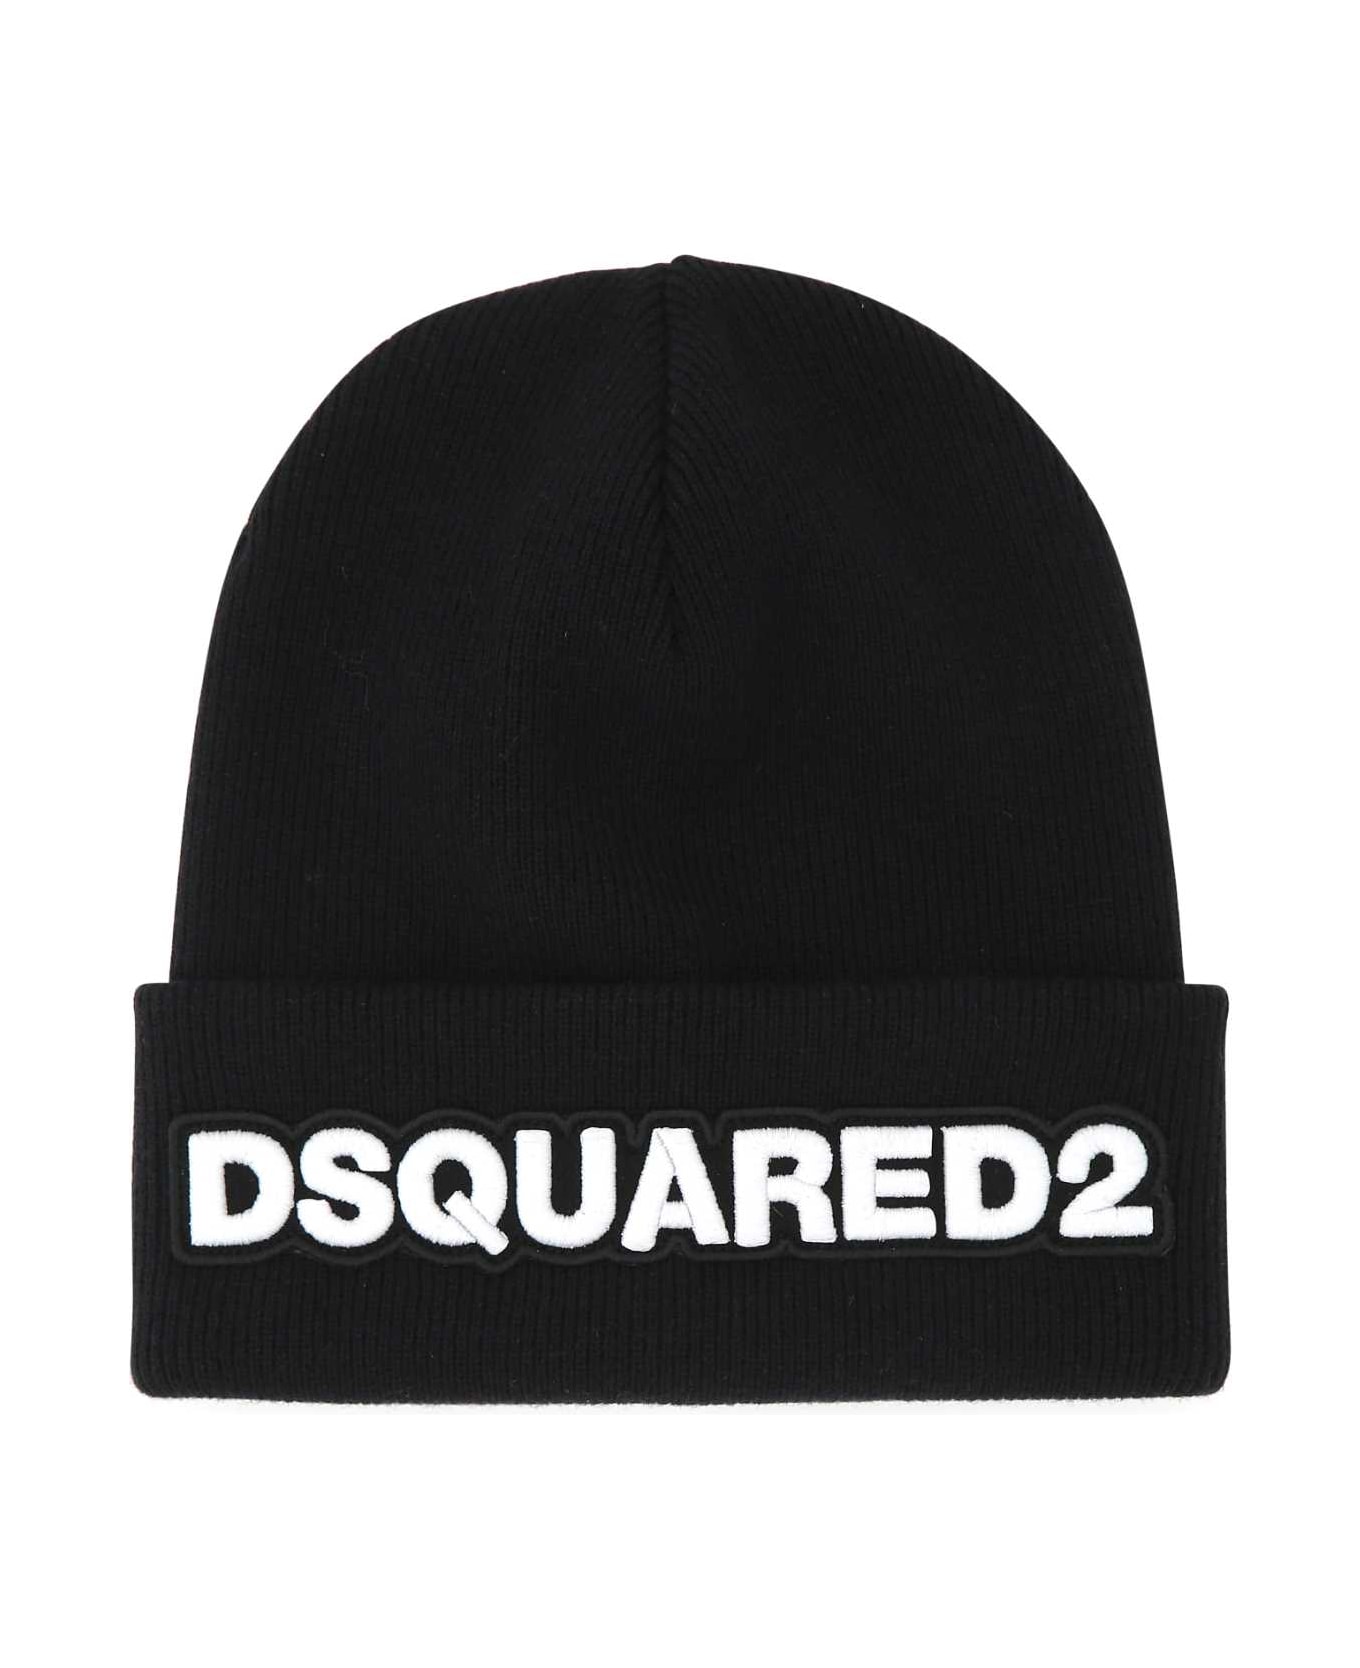 Dsquared2 Black Wool Beanie Hat - M063